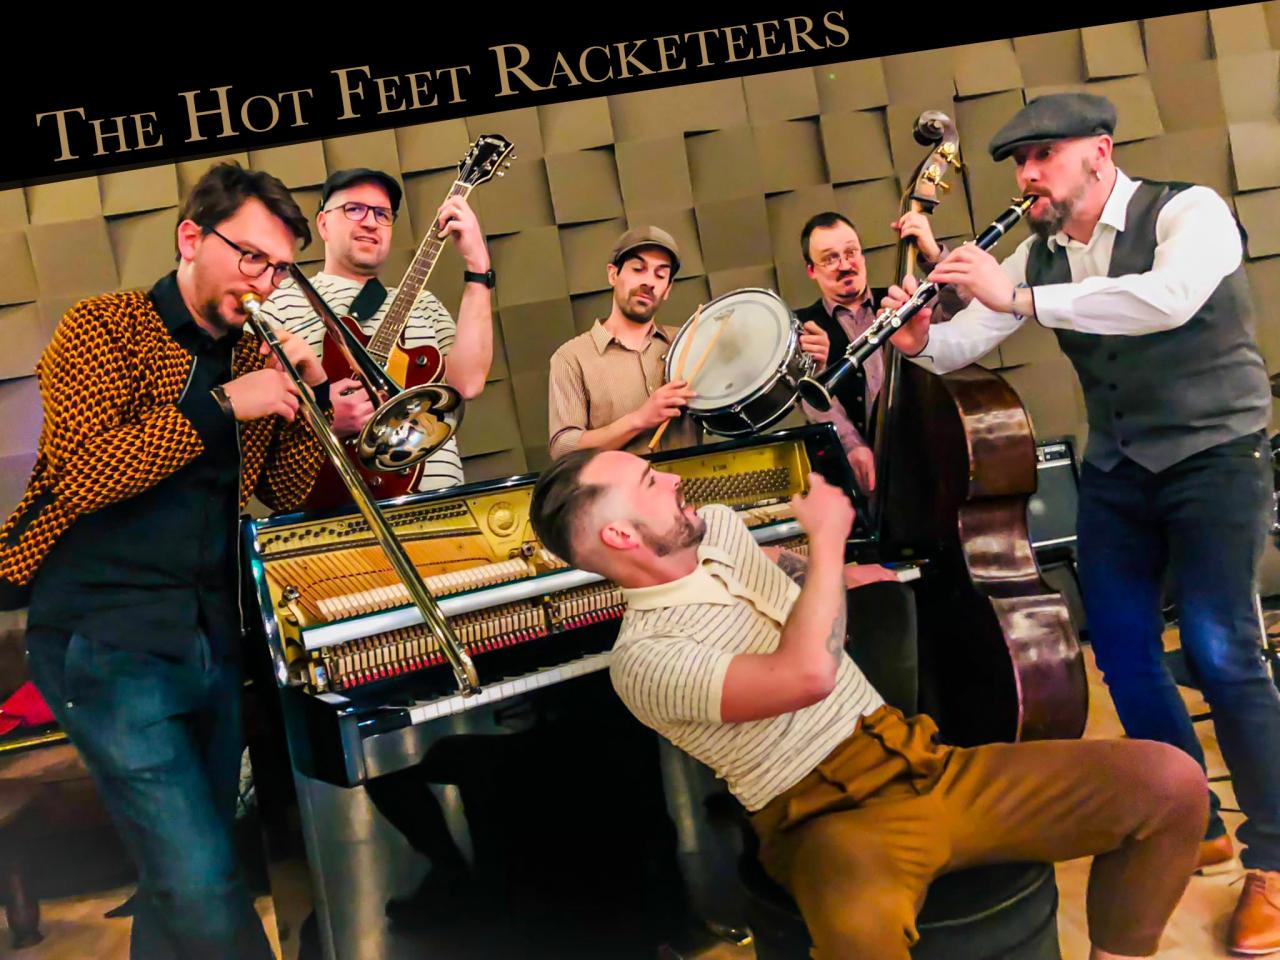 The hot feet racketeers